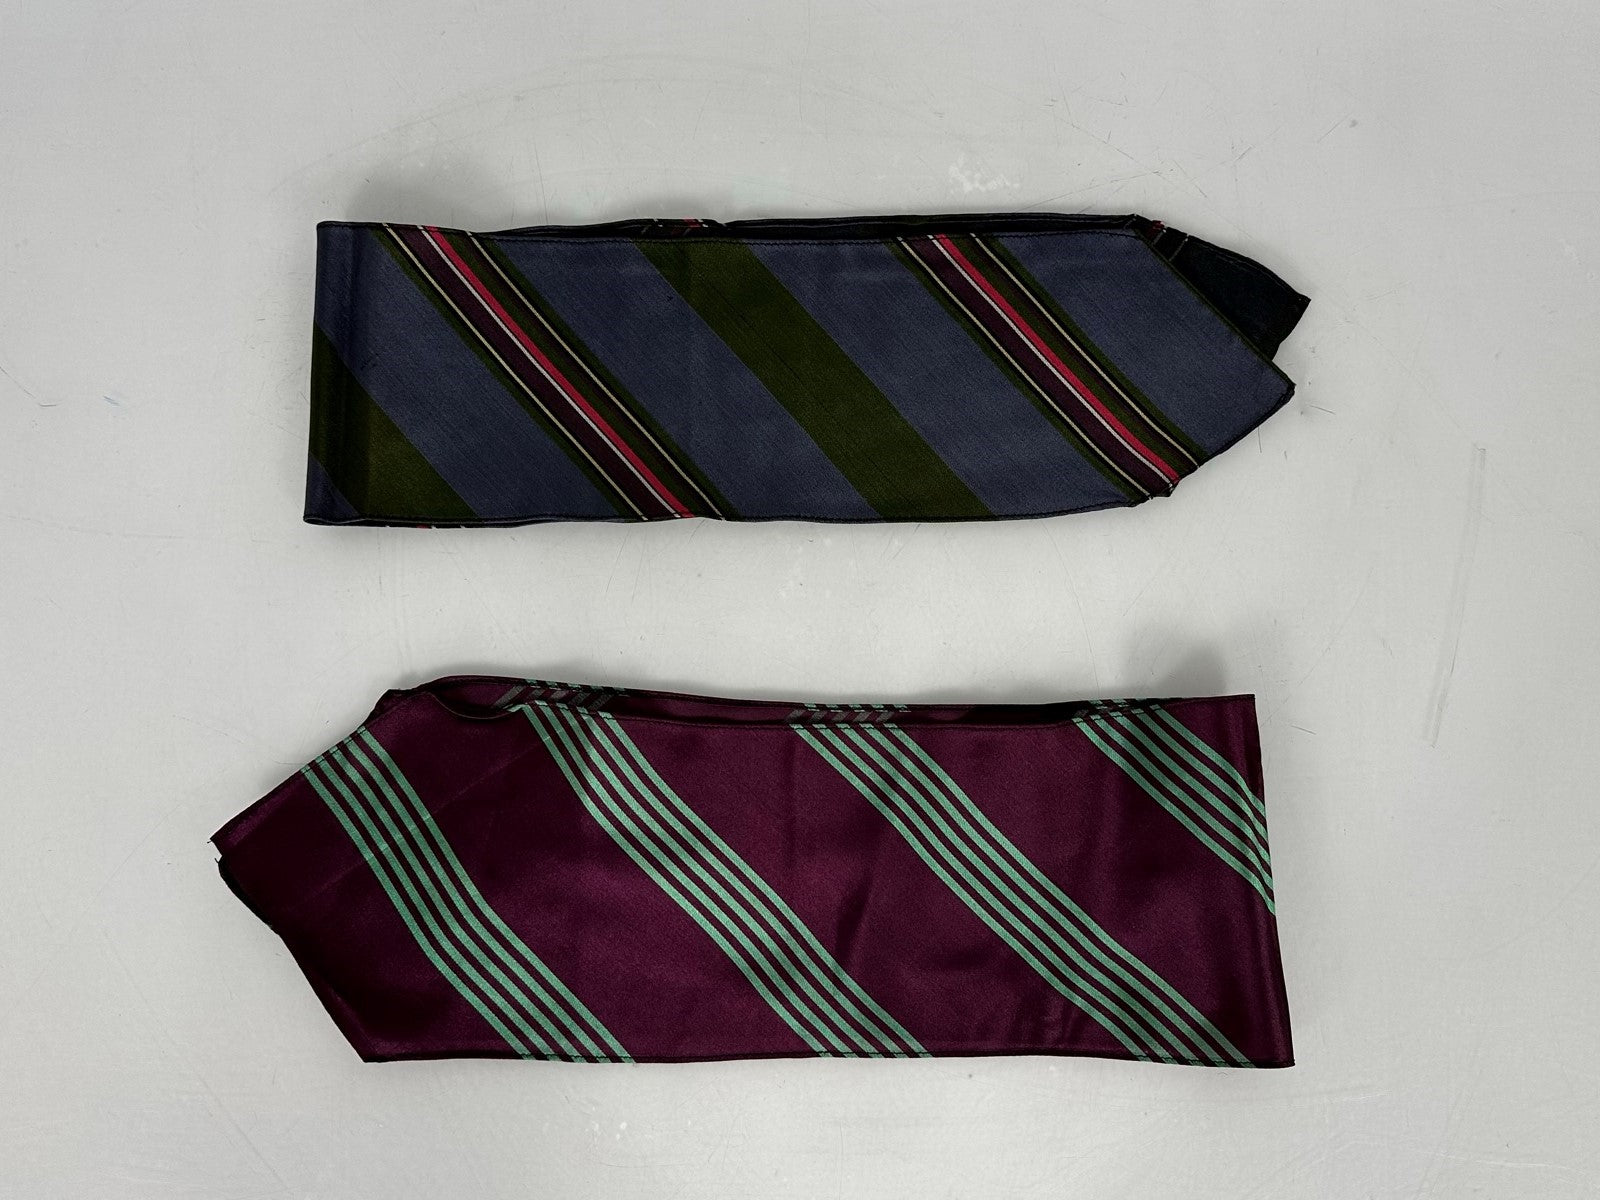 Pair of Vintage Women's Ascots Ties